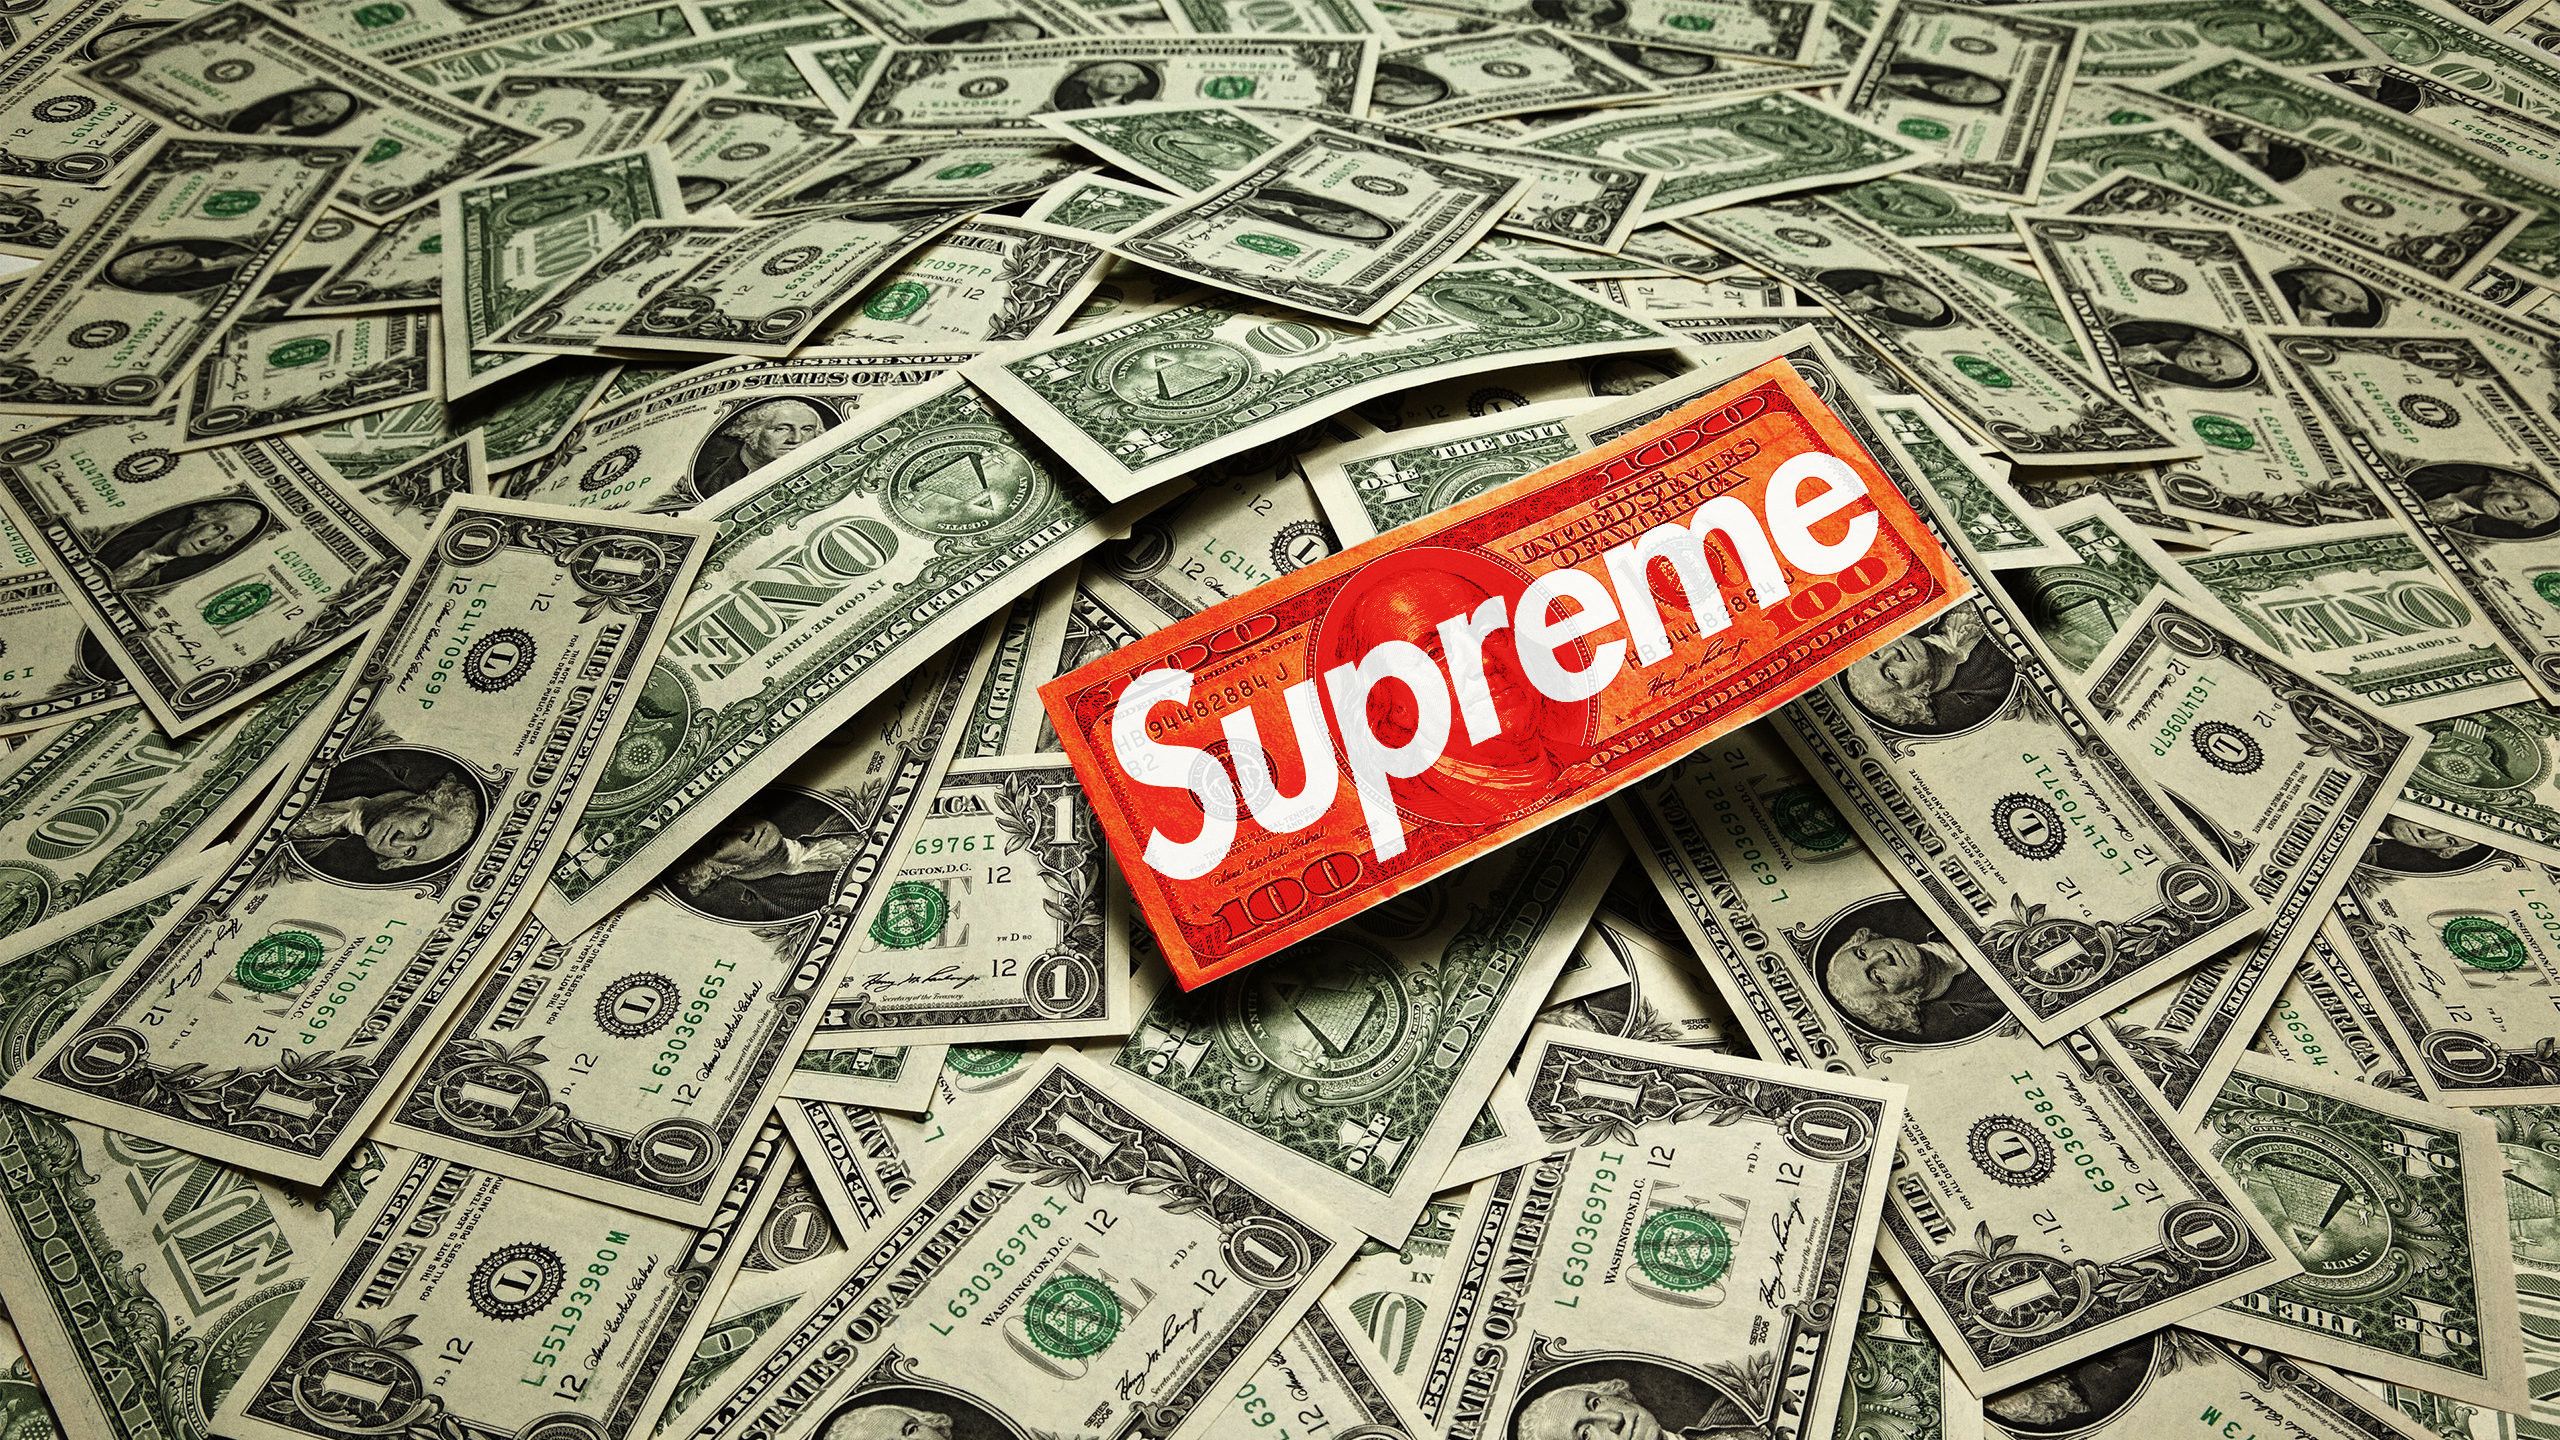 Download The Supreme Cash Wallpaper .wallpapertip.com